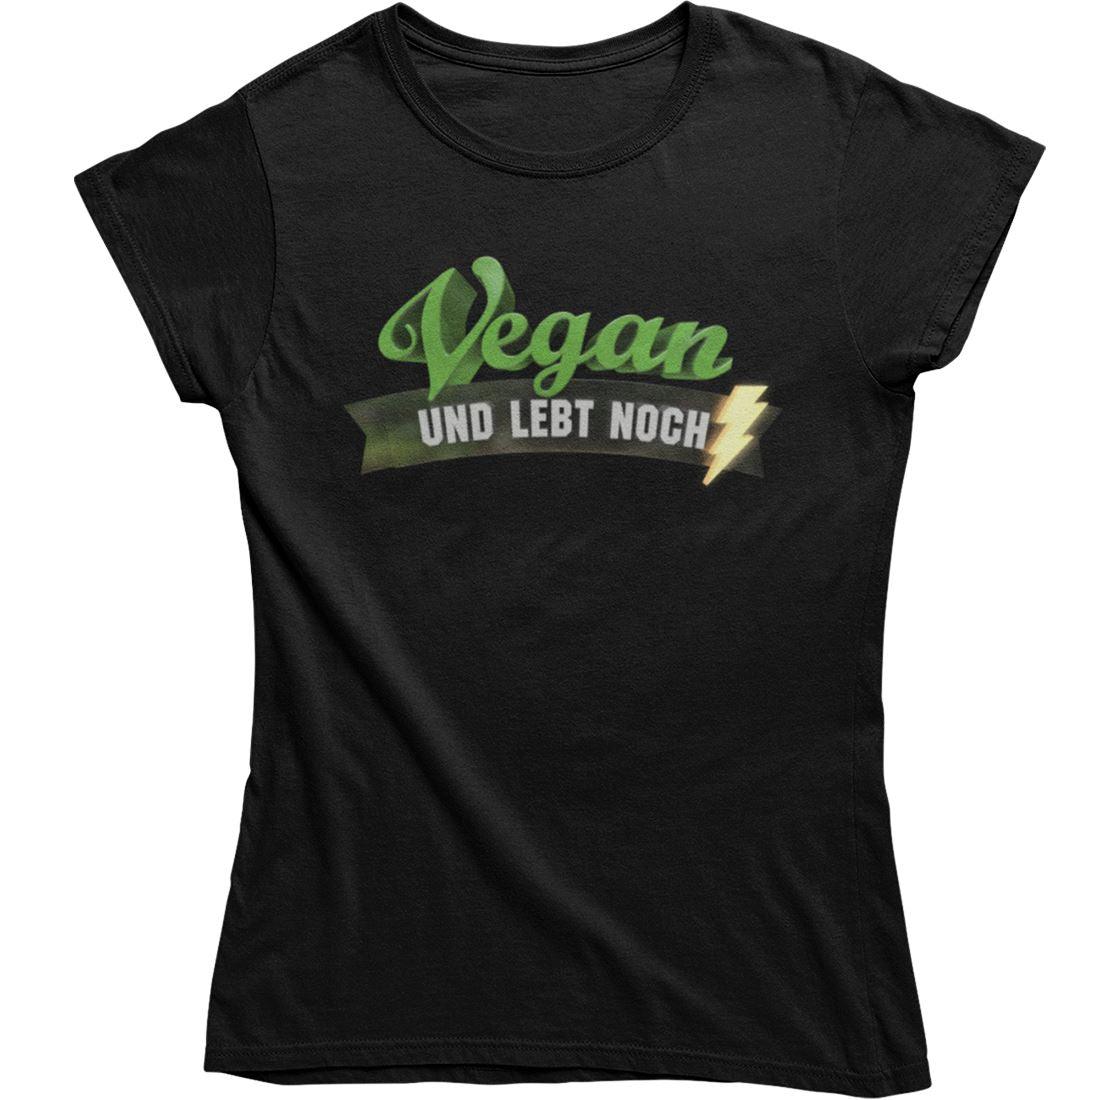 Vegan und lebt noch [v-reena] - Damen Organic Shirt - Team Vegan © vegan t shirt